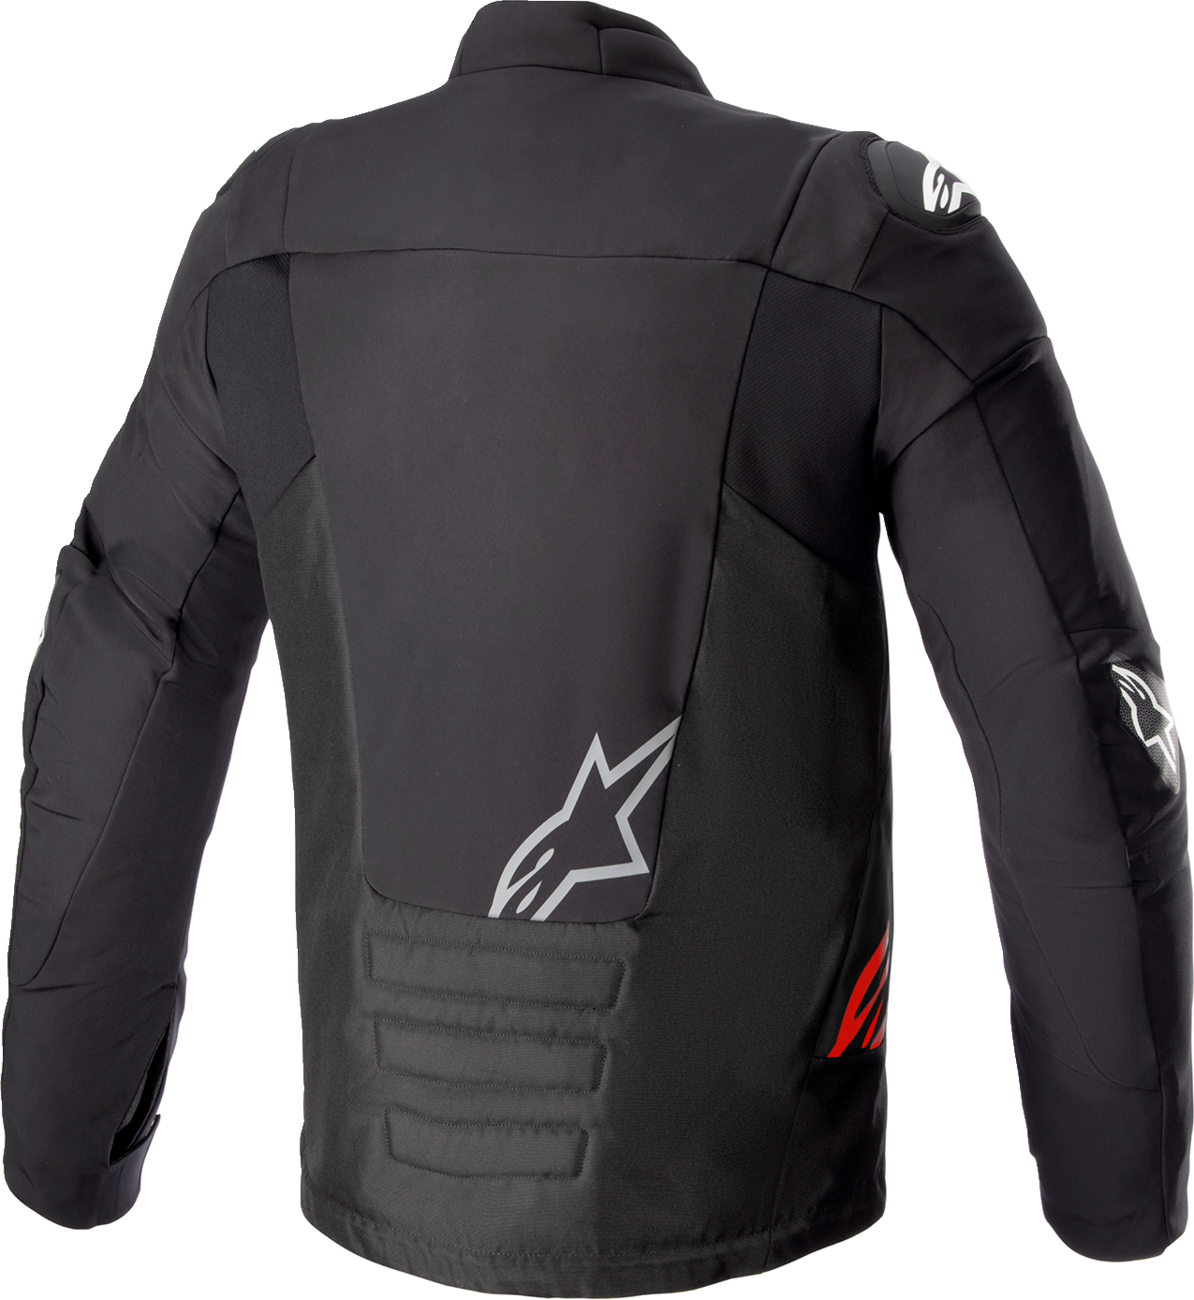 ALPINESTARS SMX Waterproof Jacket - Black/Gray/Red - Medium 3206523-1993-M